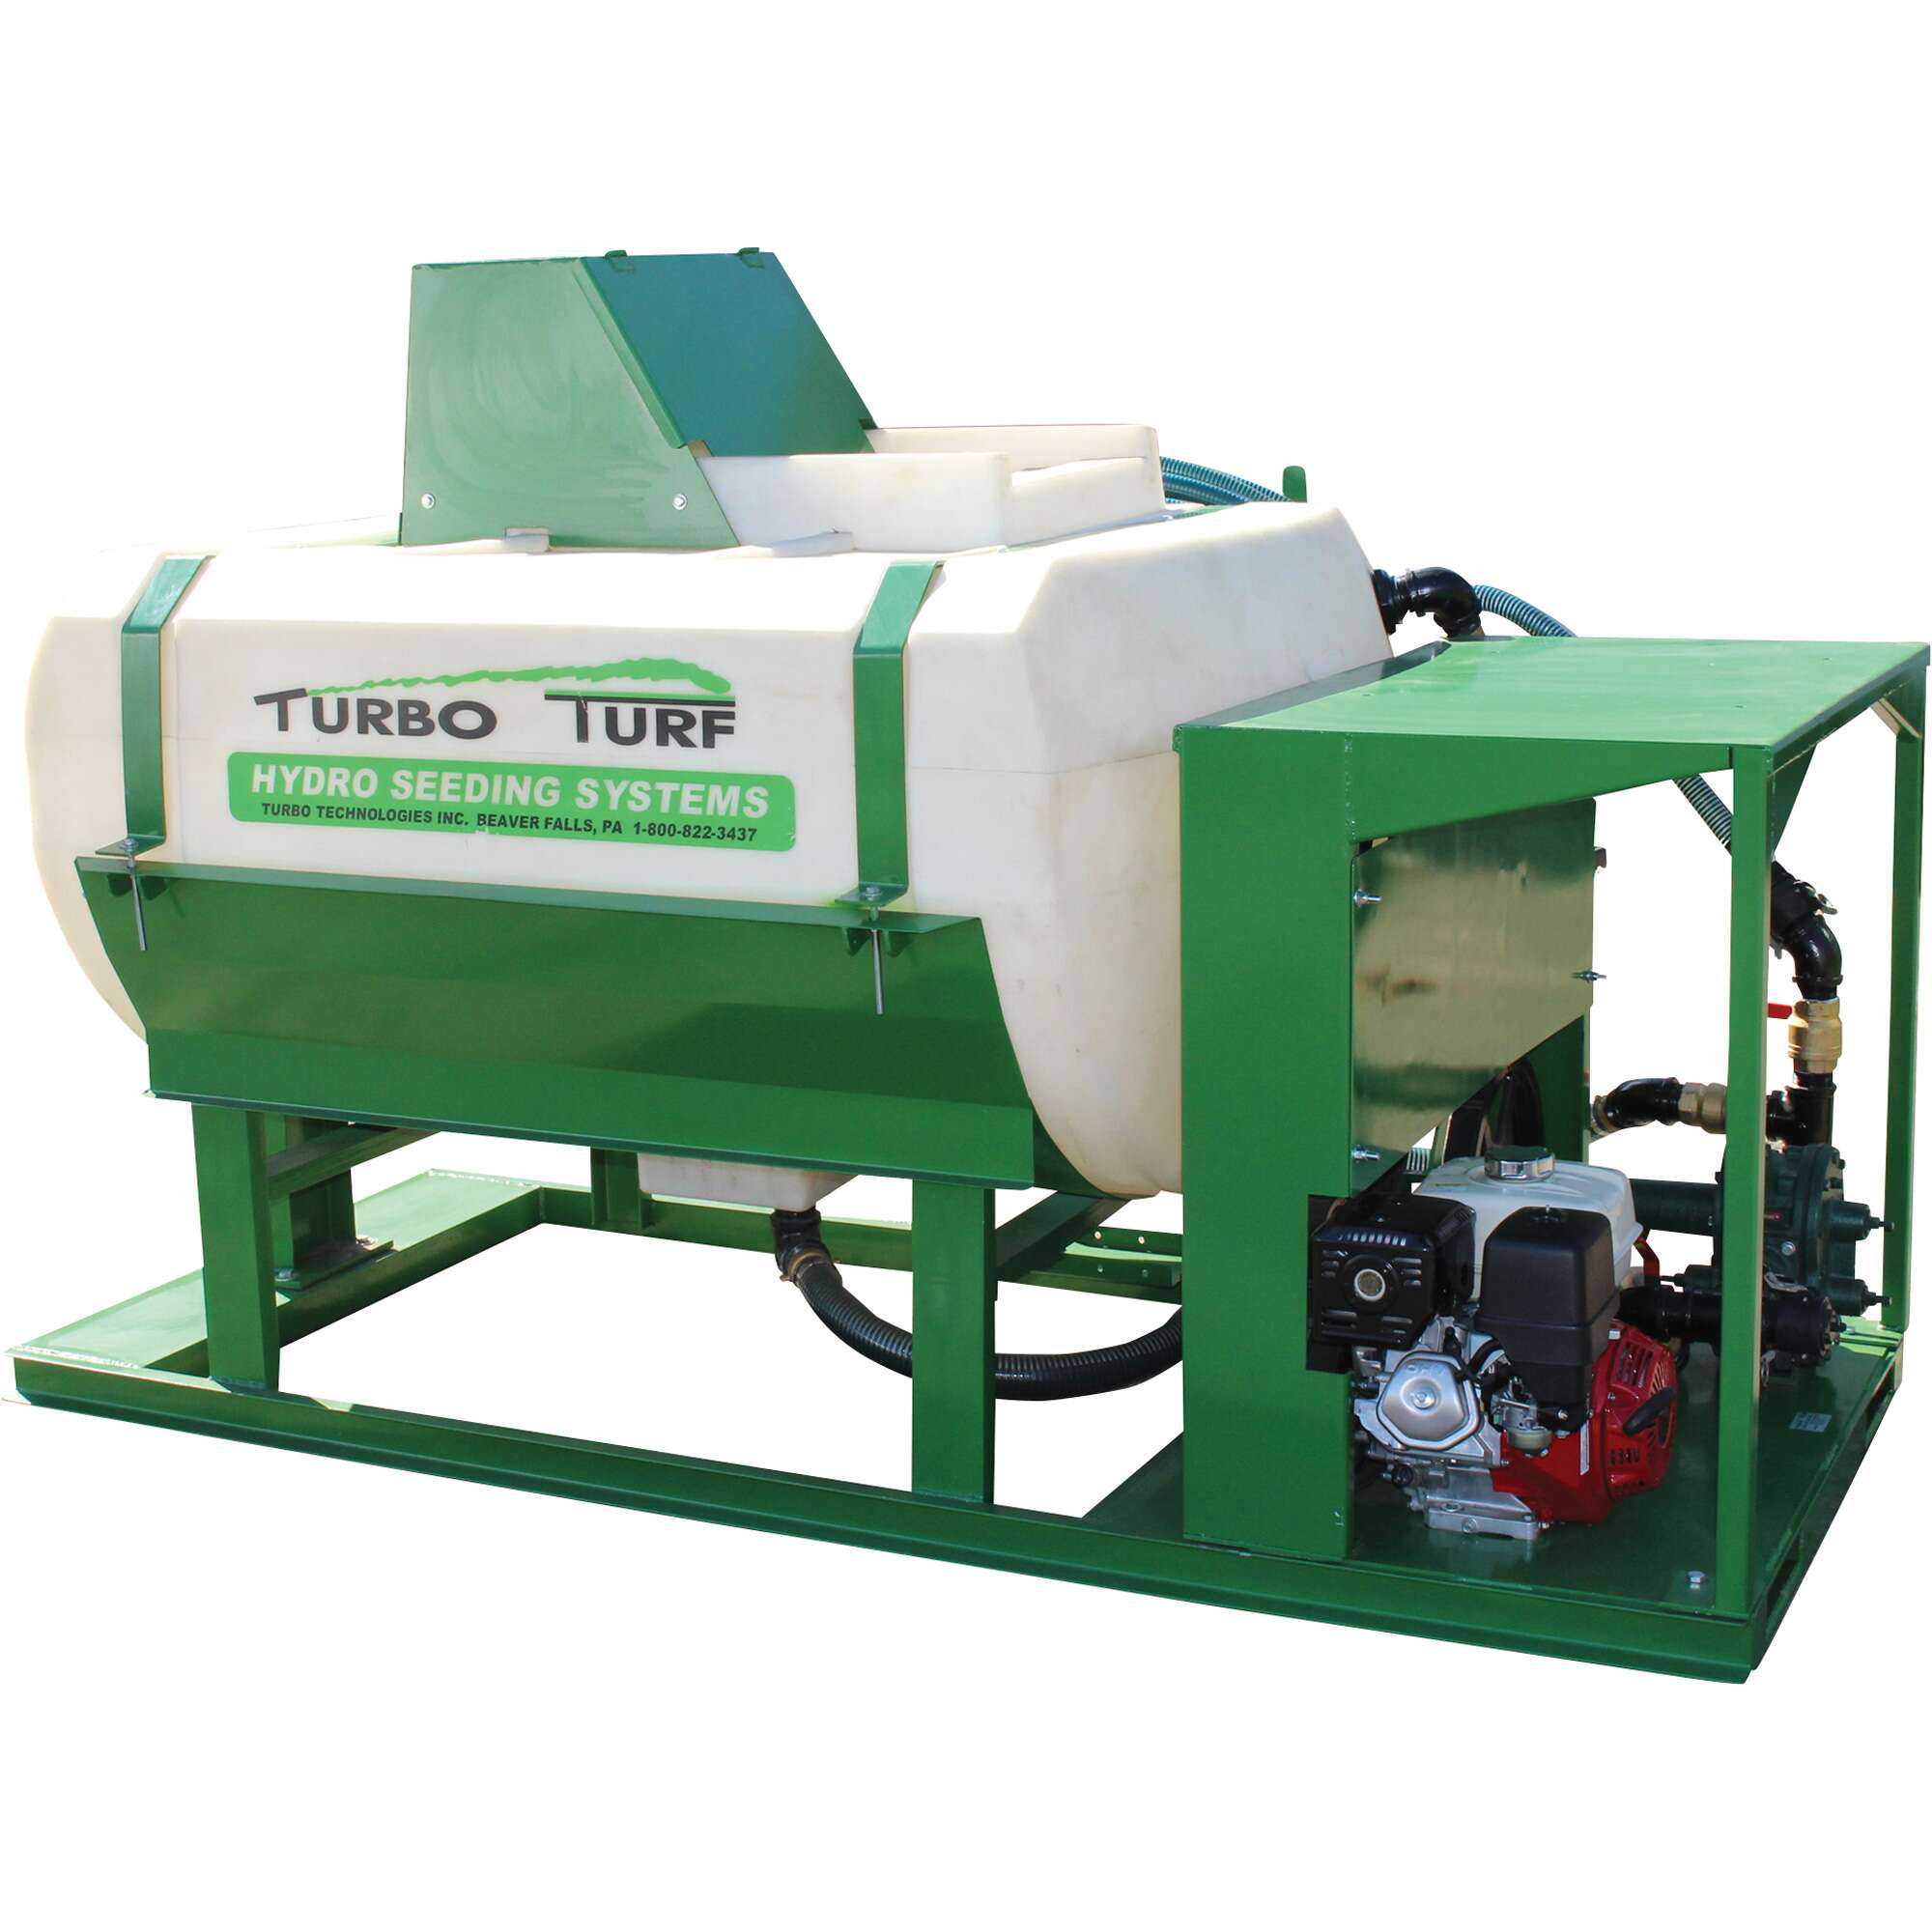 Turbo Turf Paddle Agitated Hydroseeding Unit 400 Gallon Capacity